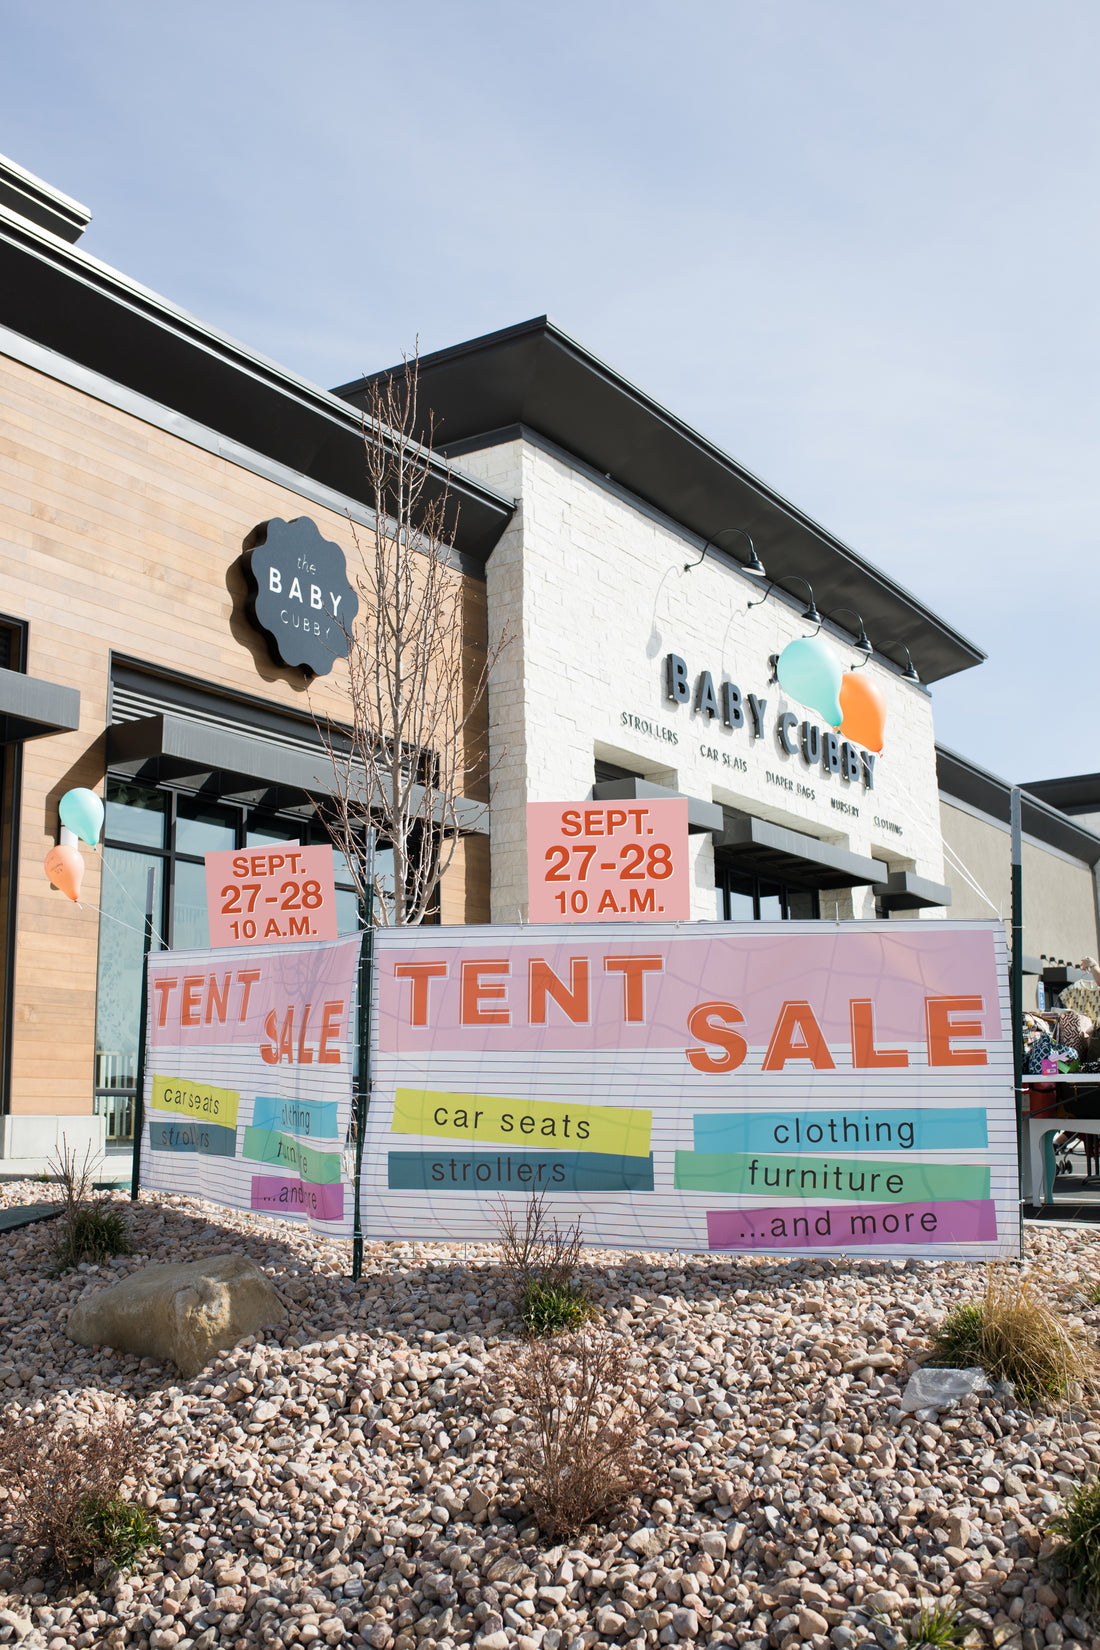 It's Tent Sale Time!